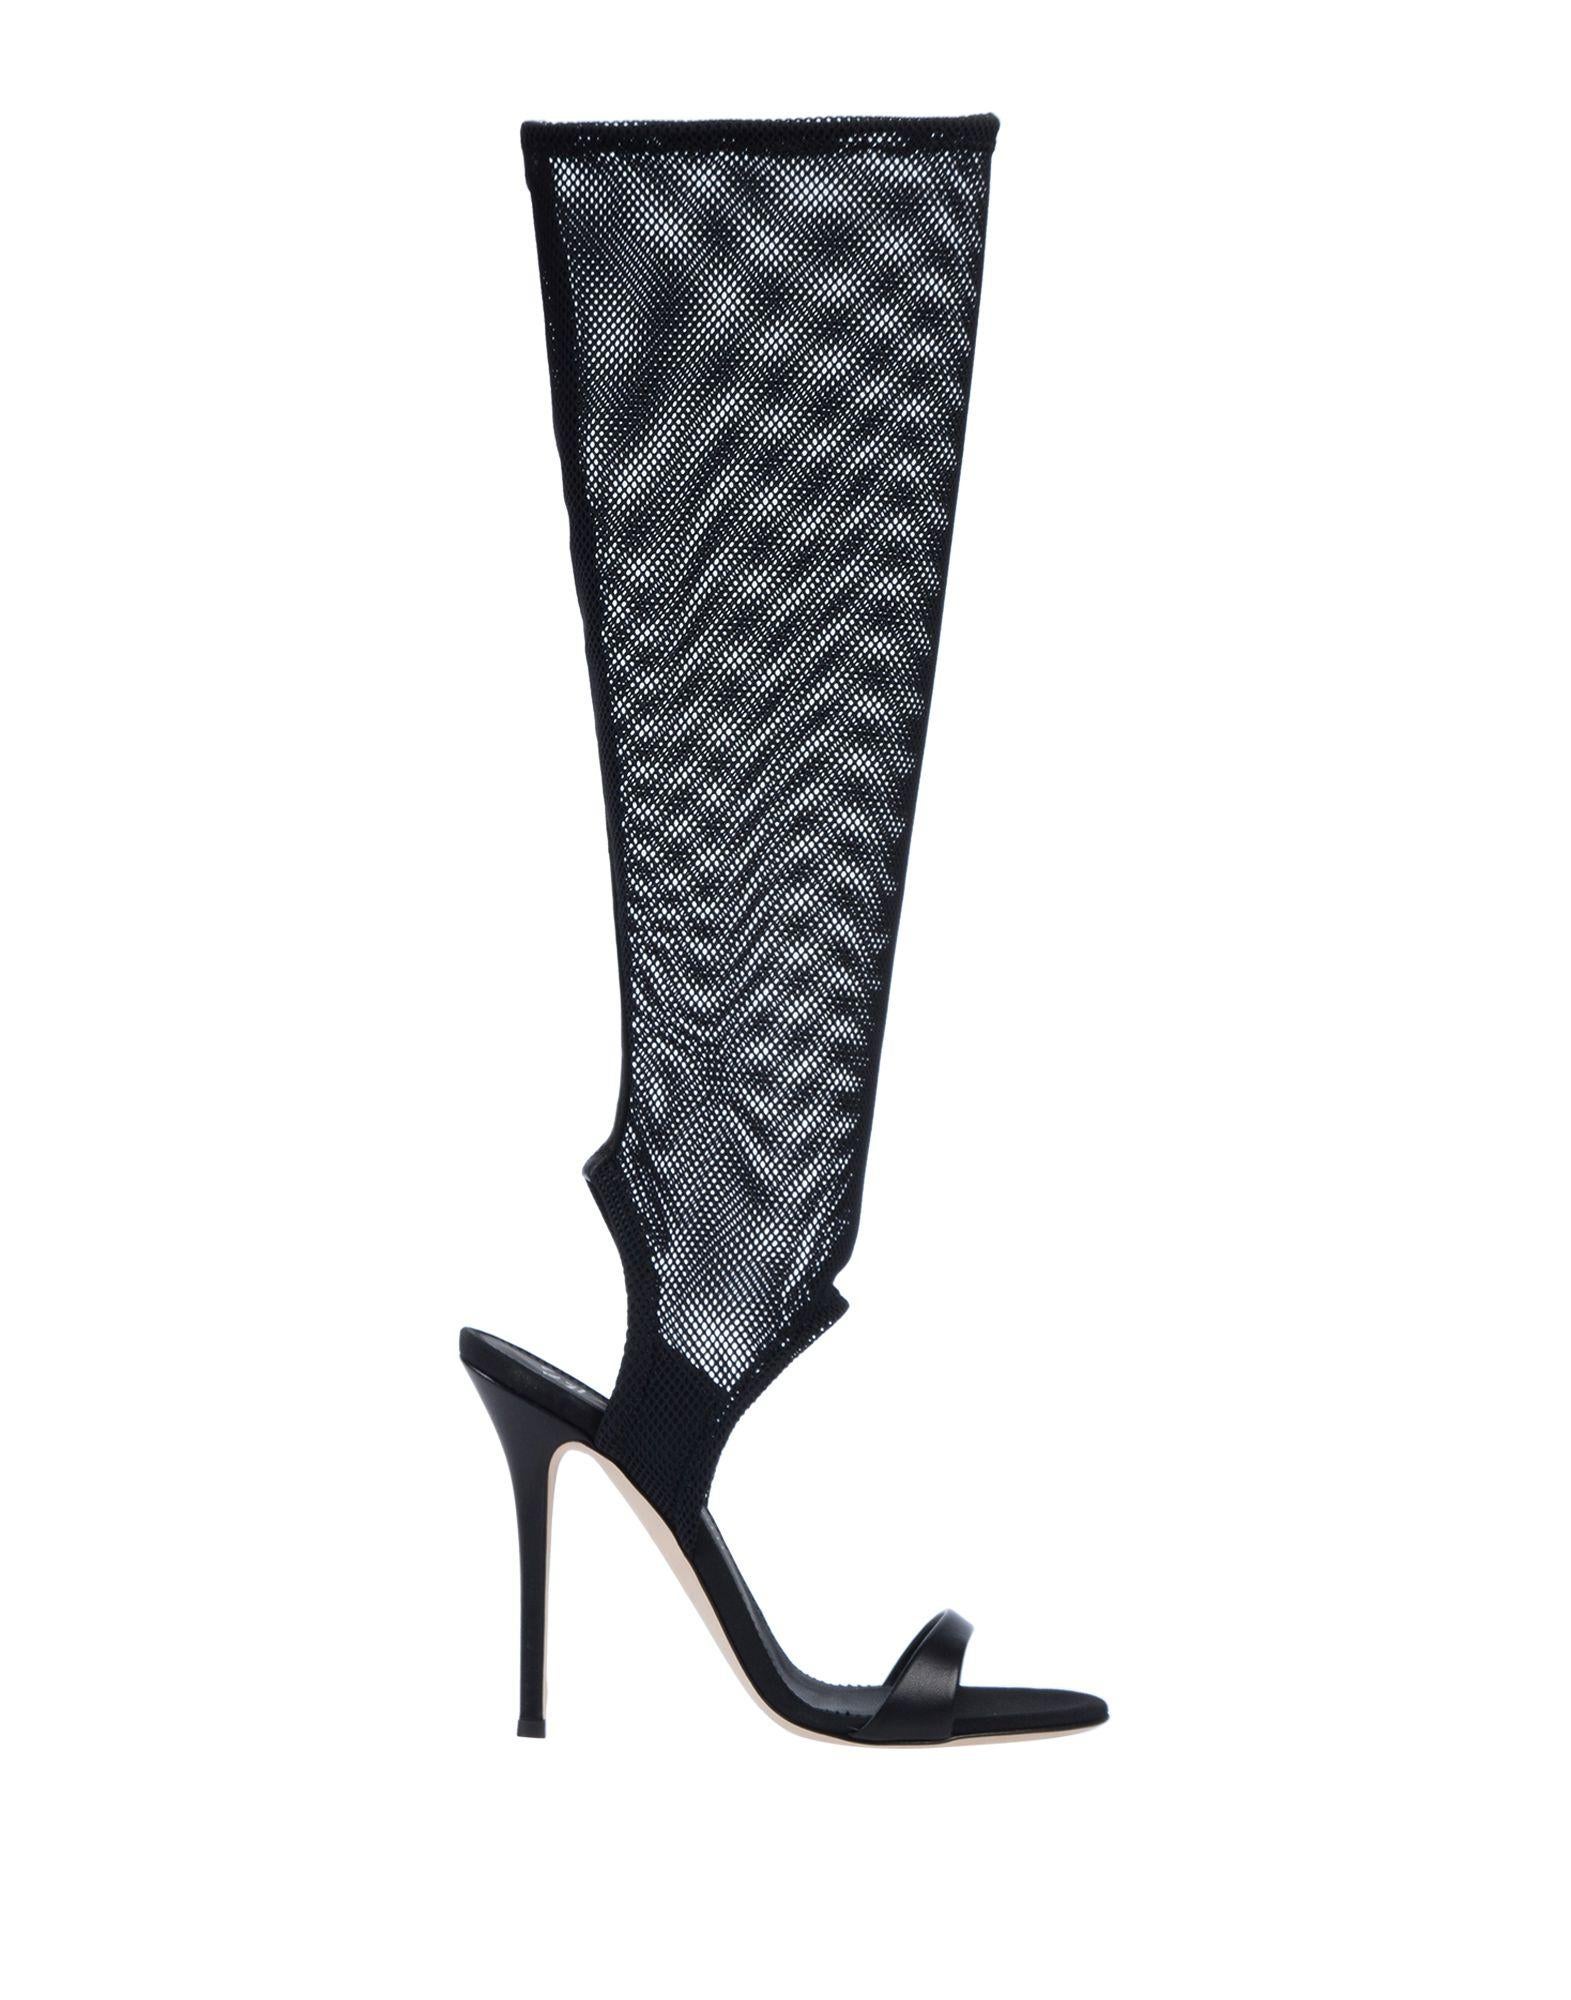 Women's Giuseppe Zanotti NEW Black Leather Fishnet Knee Evening Sandals Heels in Box